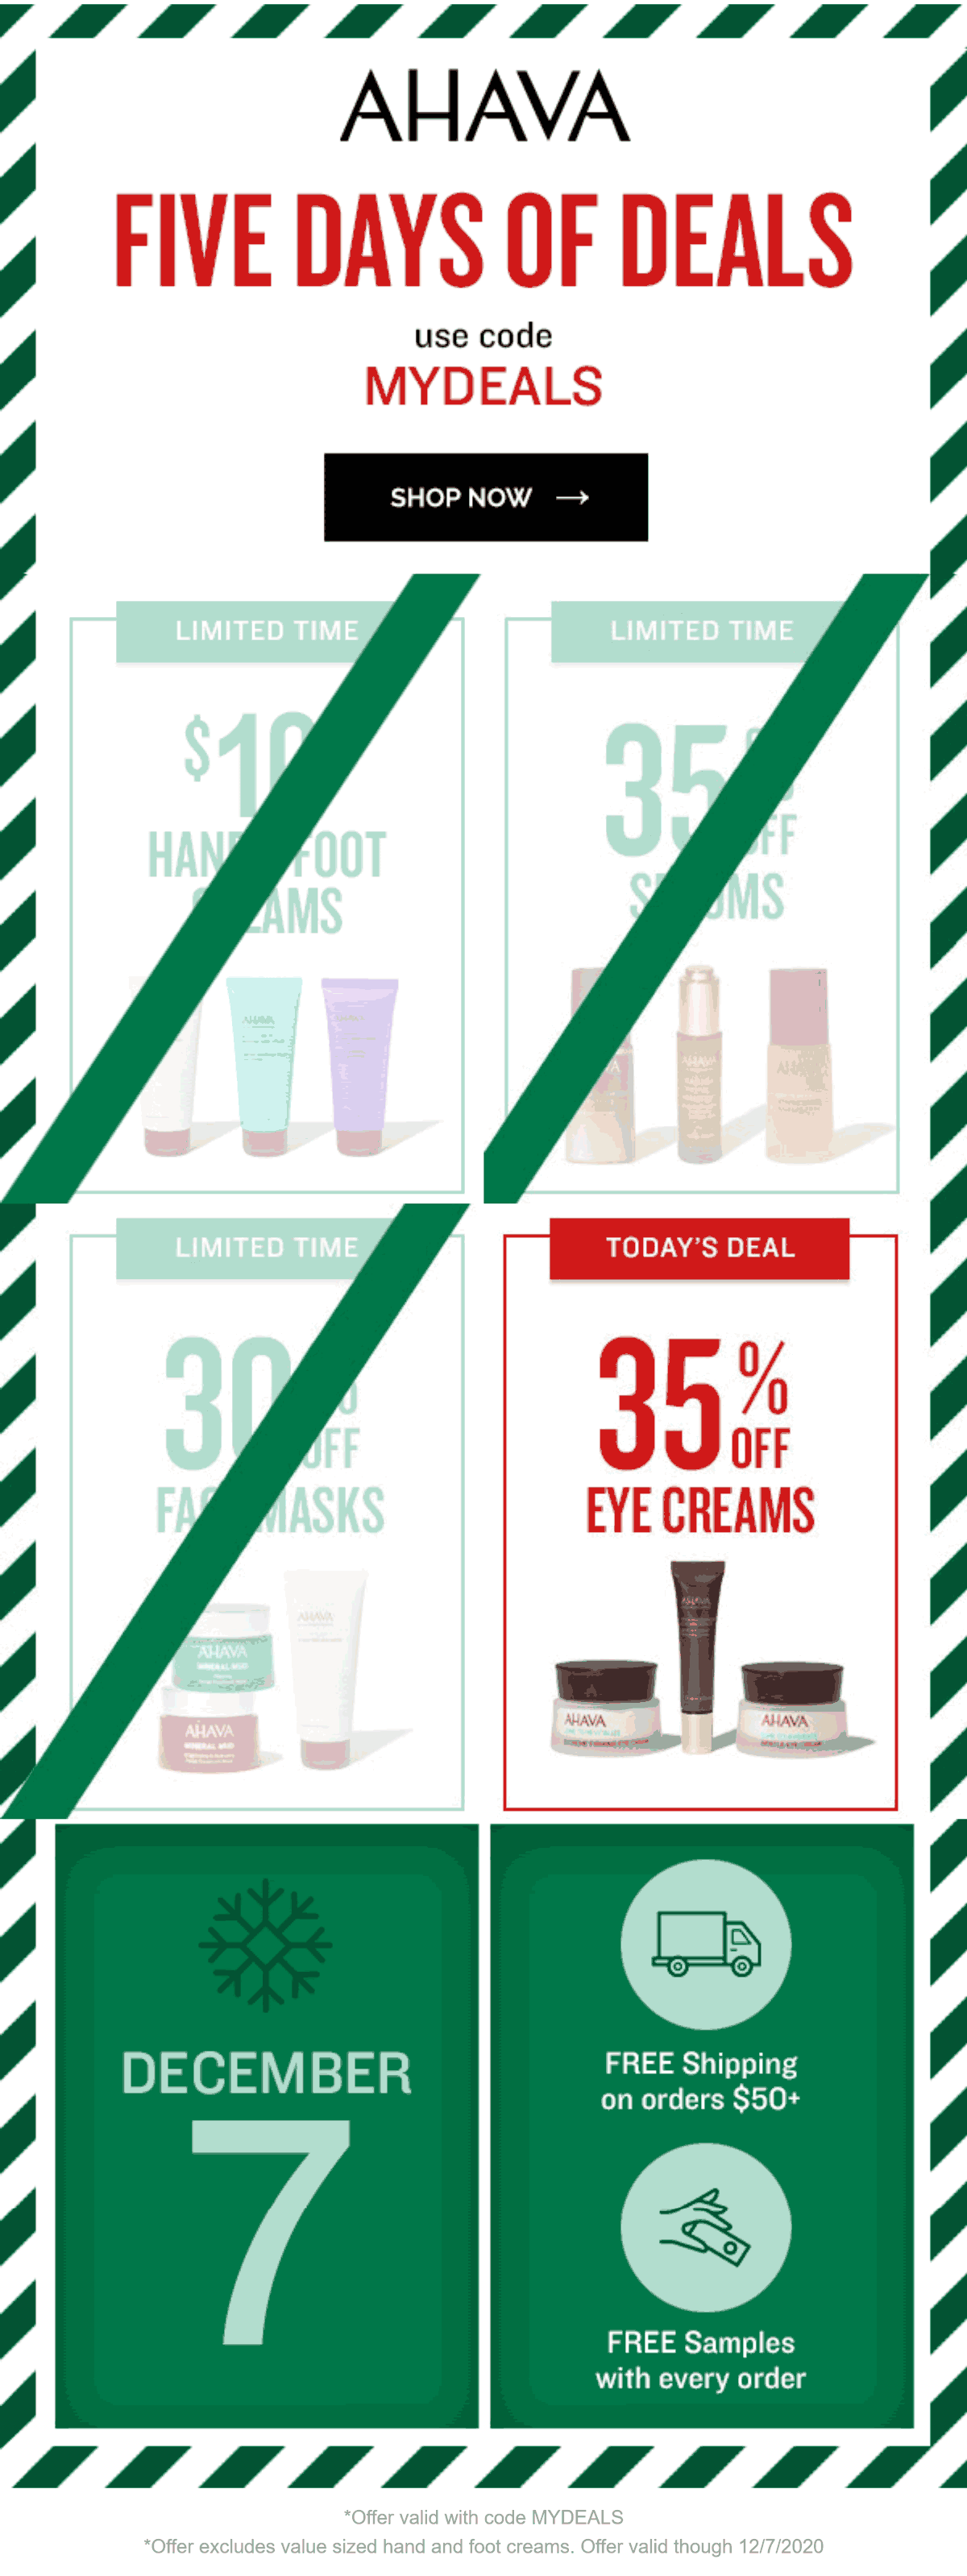 AHAVA stores Coupon  35% off eye creams today at AHAVA via promo code MYDEALS #ahava 